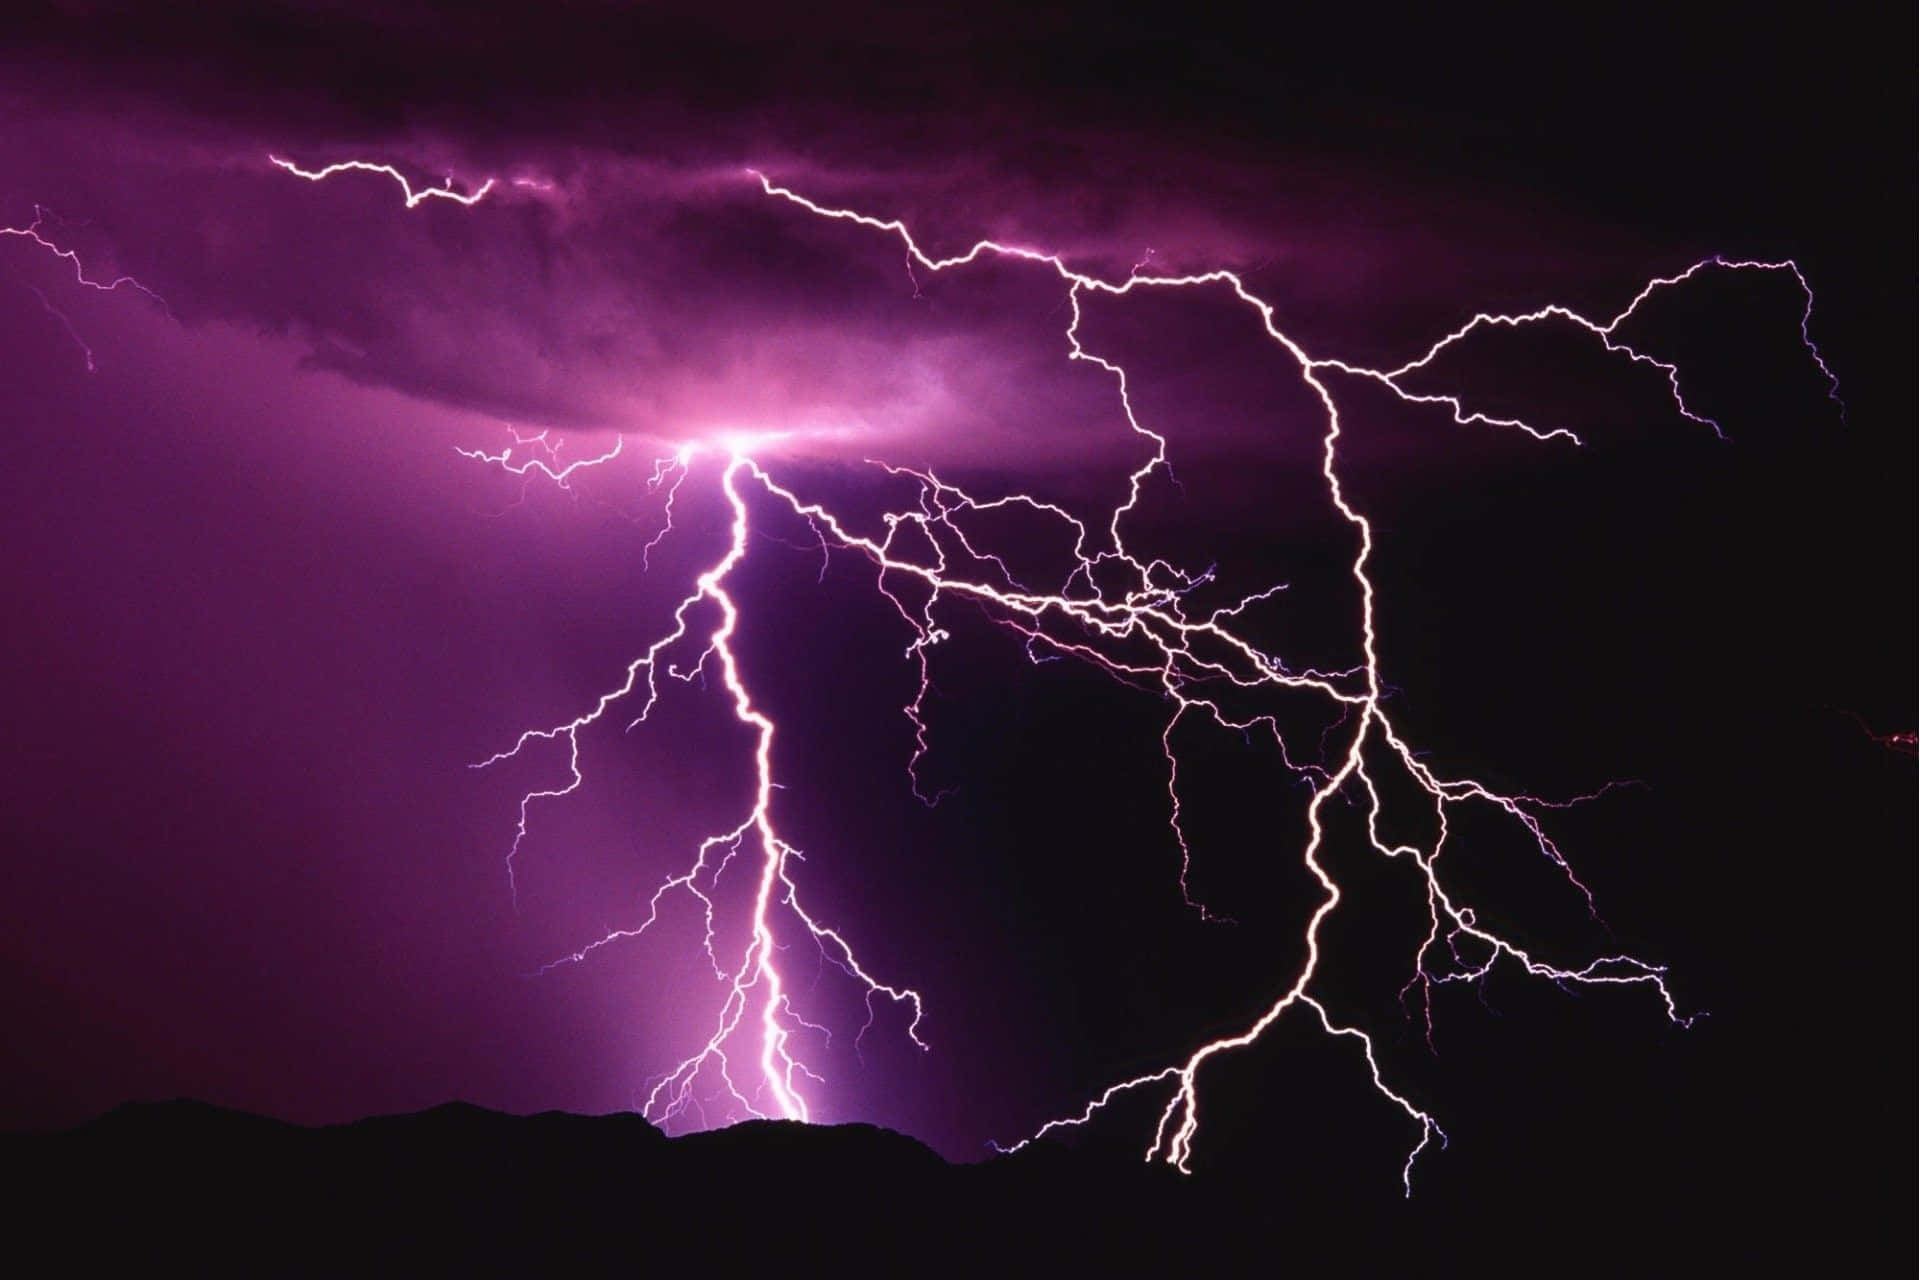 A bolt of lightning illuminates a dark storm cloud.